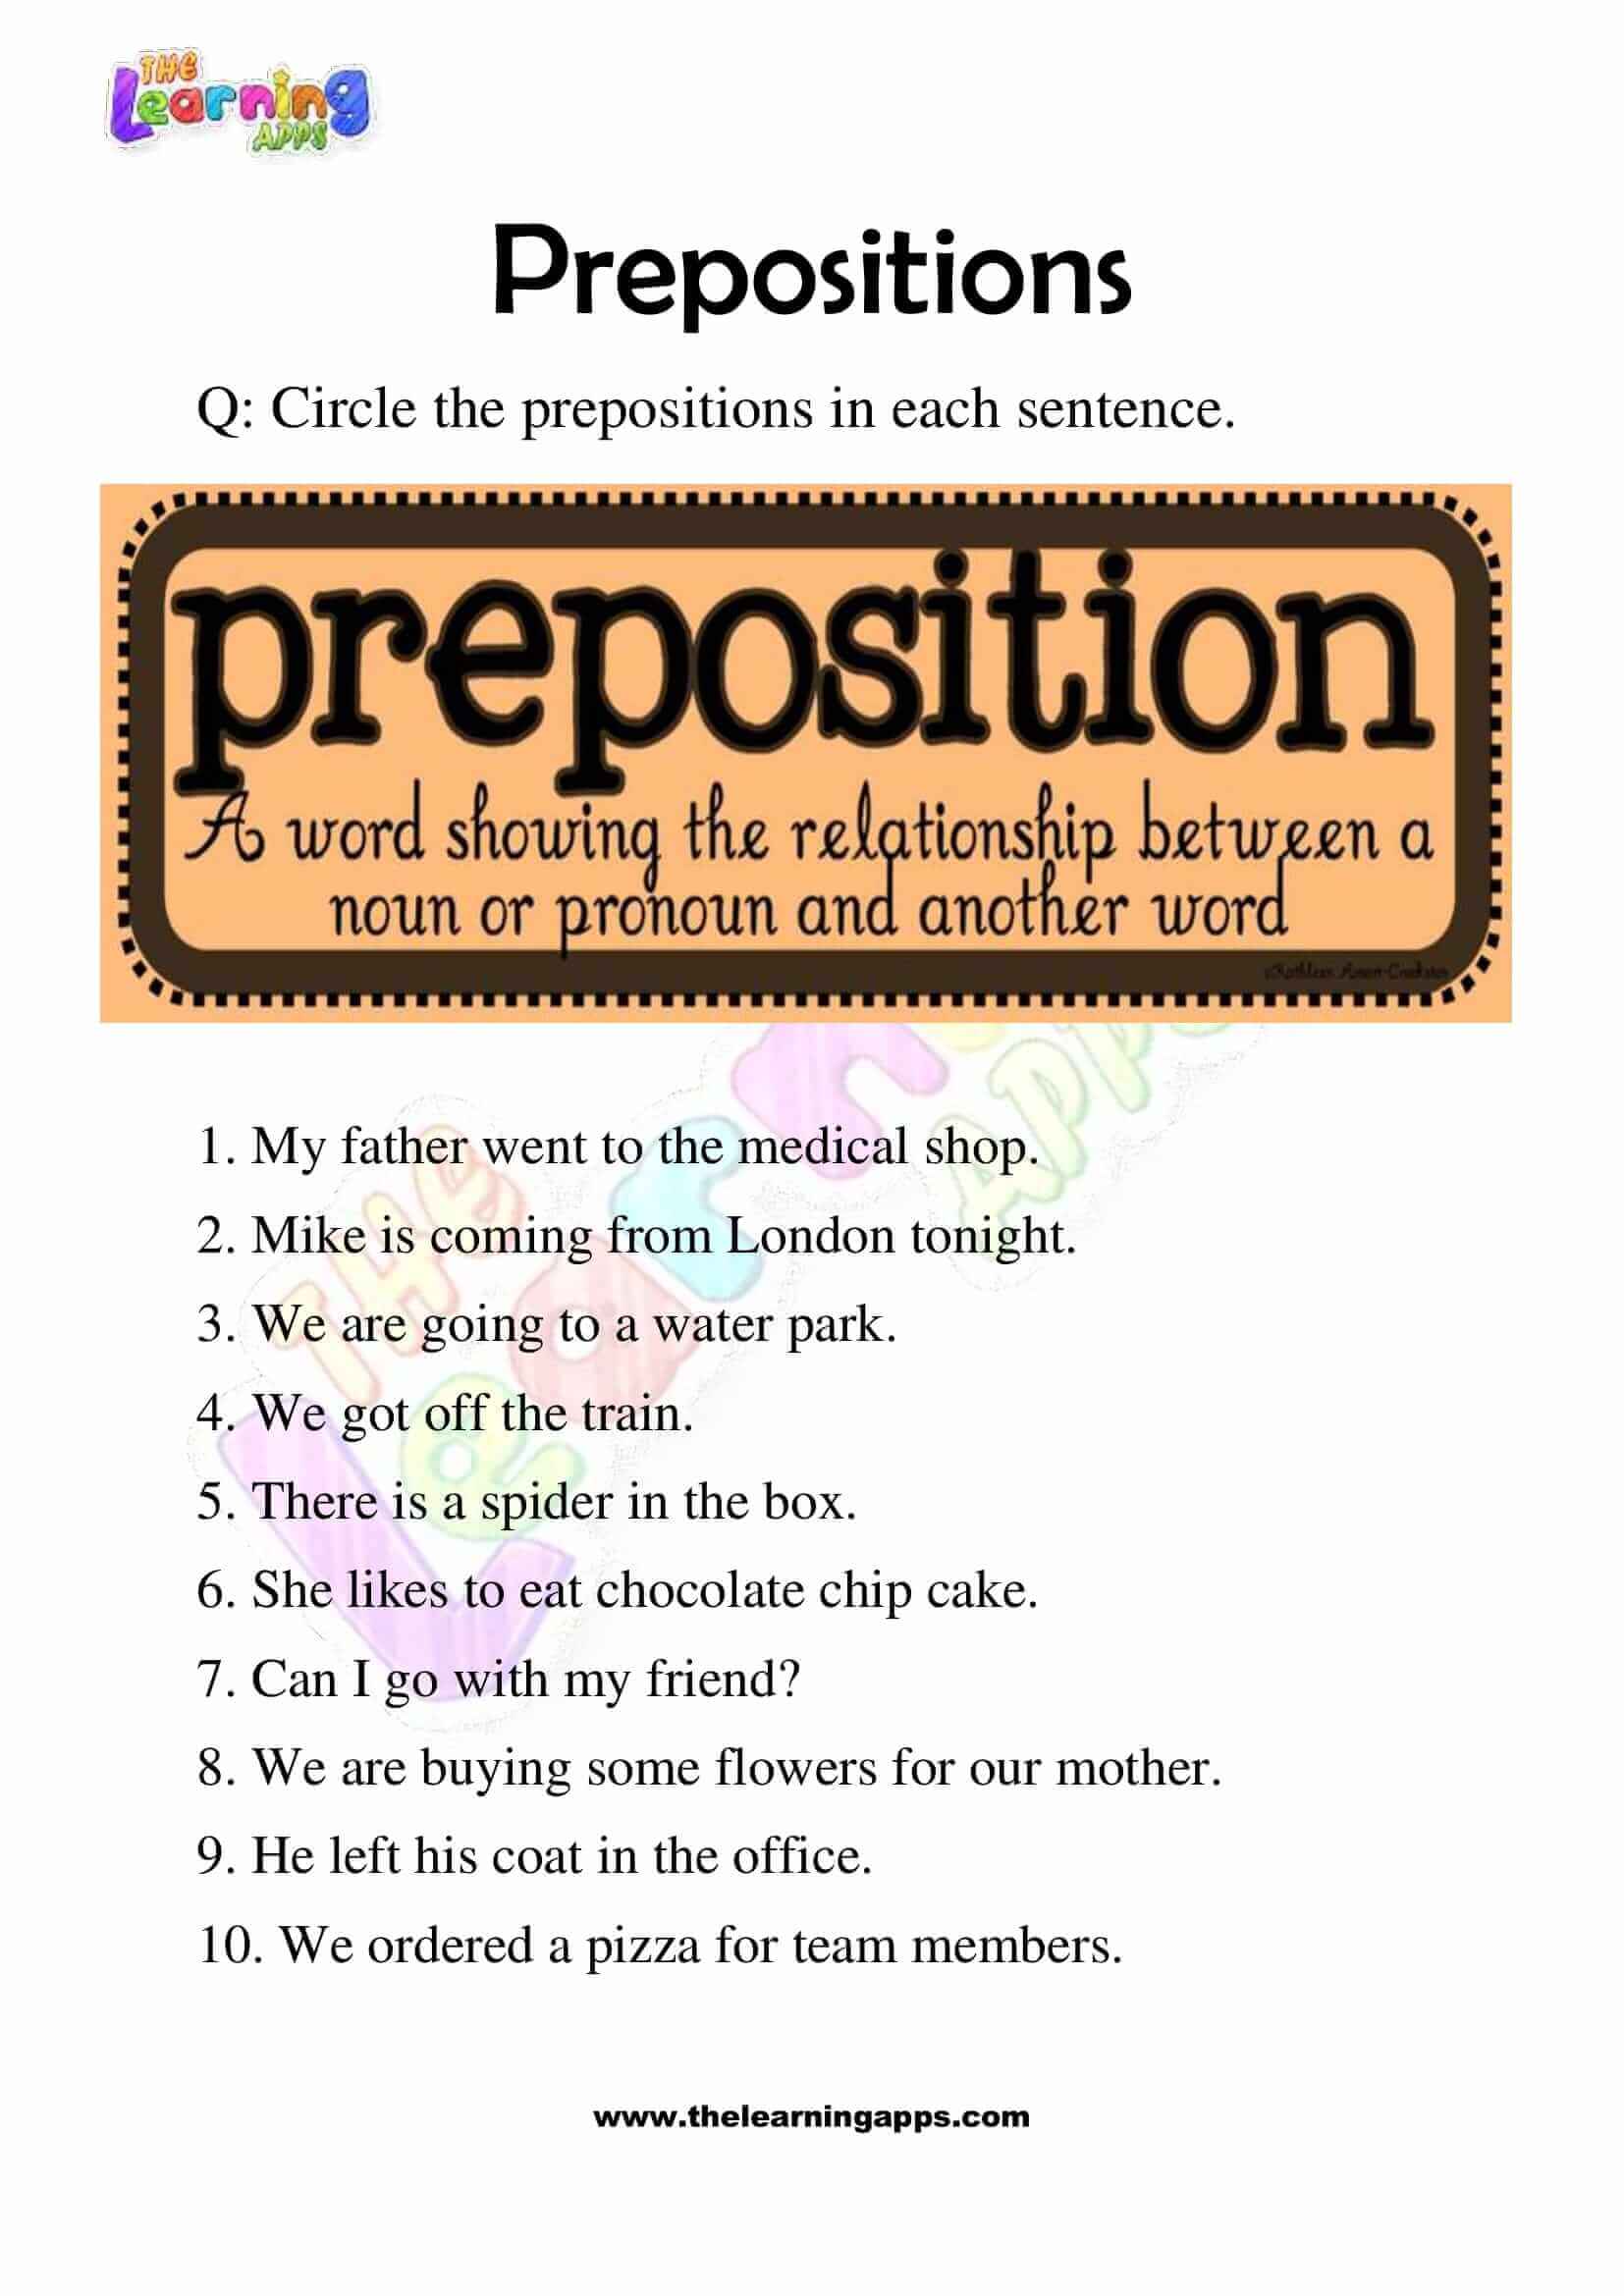 Prepositions-Worksheets-Grade-3-Activity-2